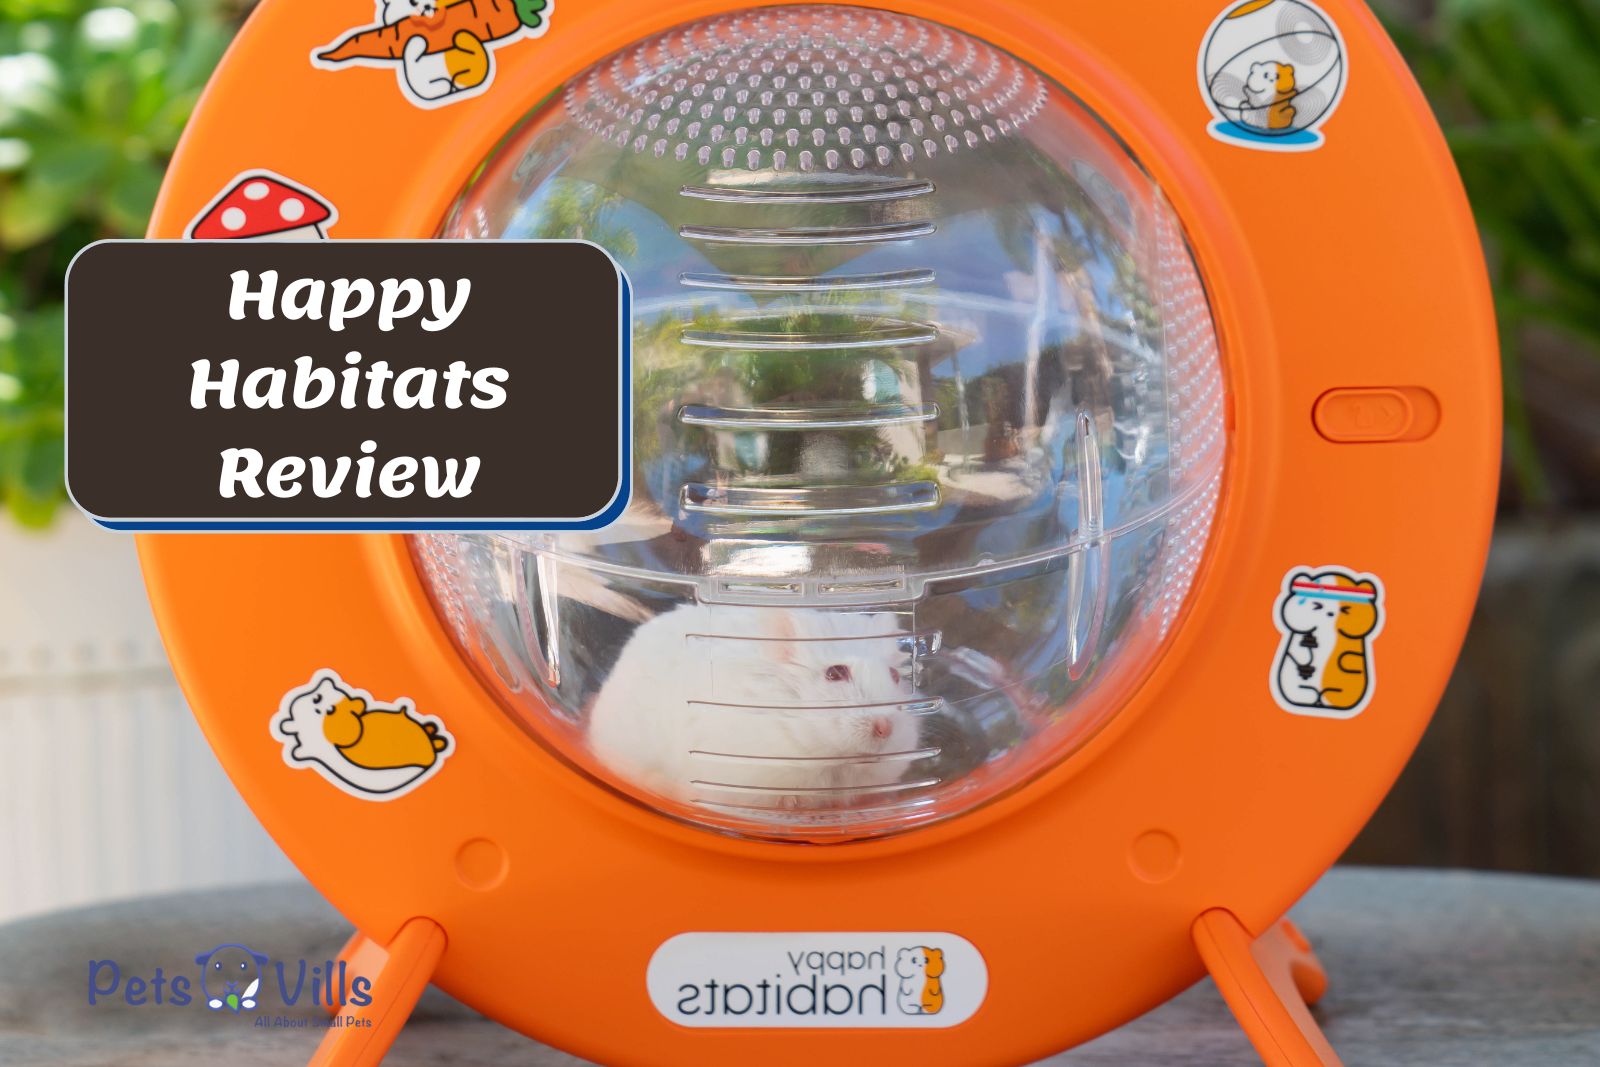 guinea pig inside the Happy Habitats Review